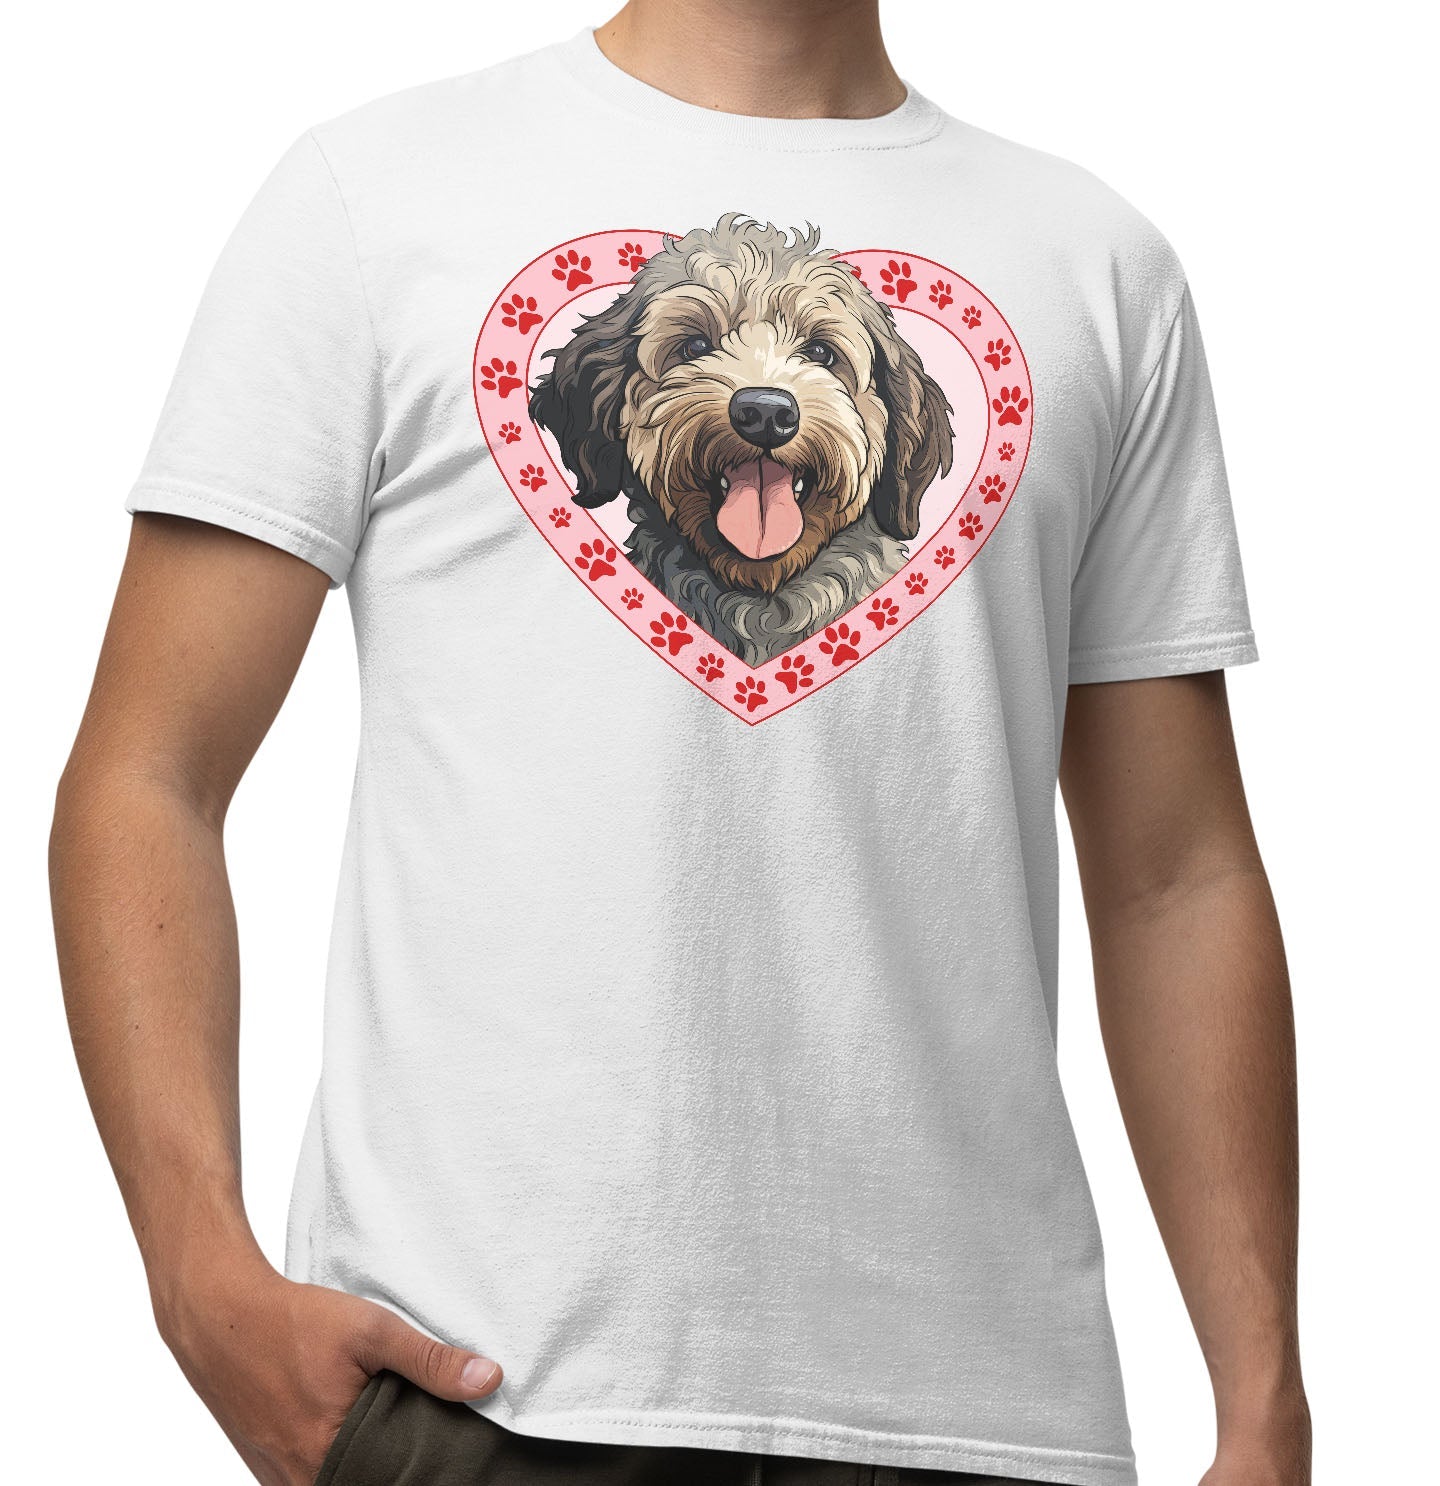 Spanish Water Dog Illustration In Heart - Adult Unisex T-Shirt